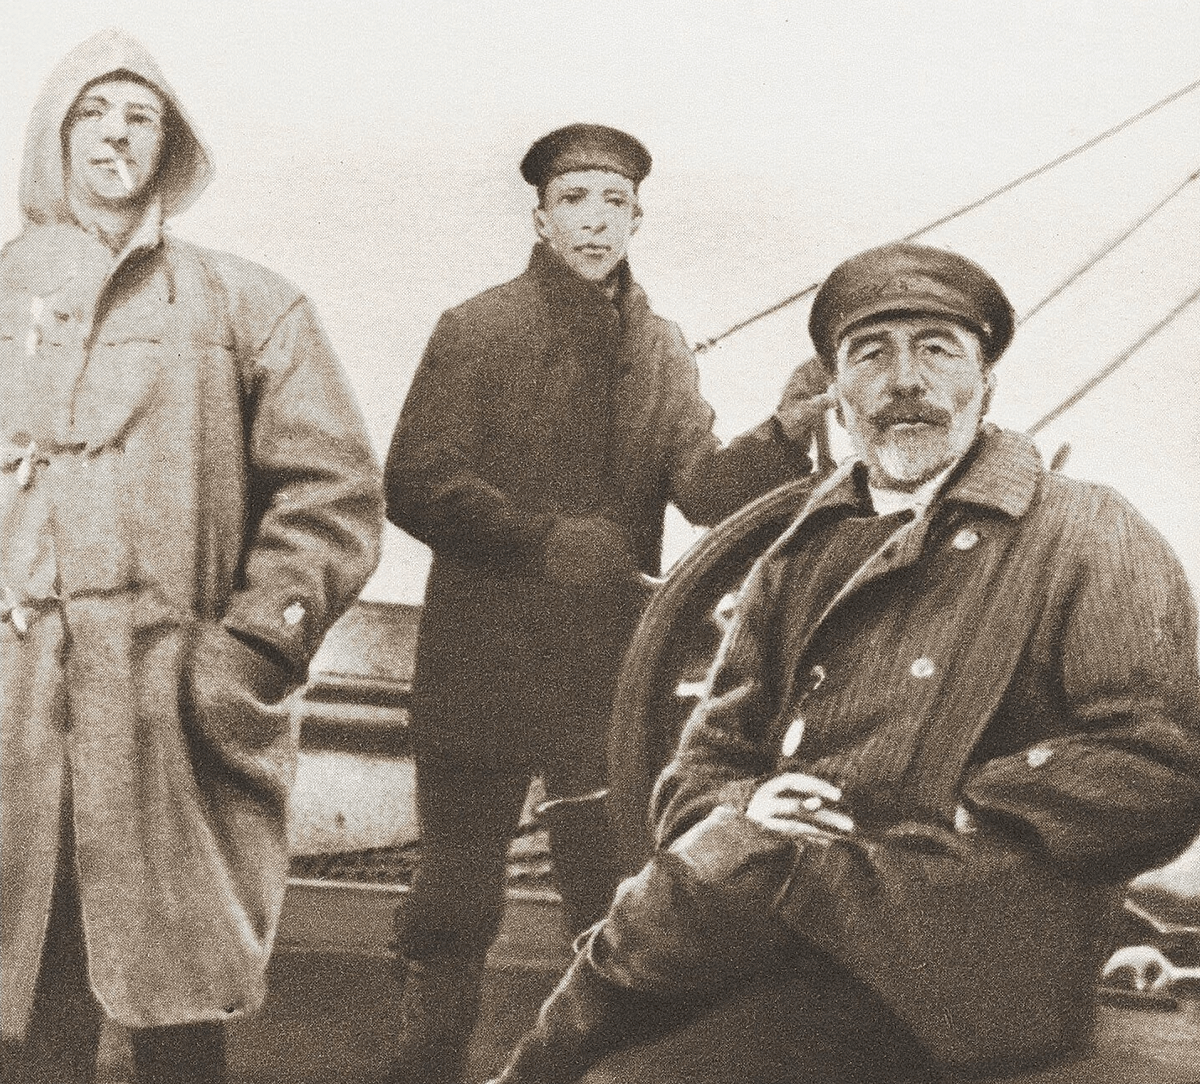 Joseph Conrad (seated) aboard the HMS Ready in 1916 (Widener Library, Harvard University)